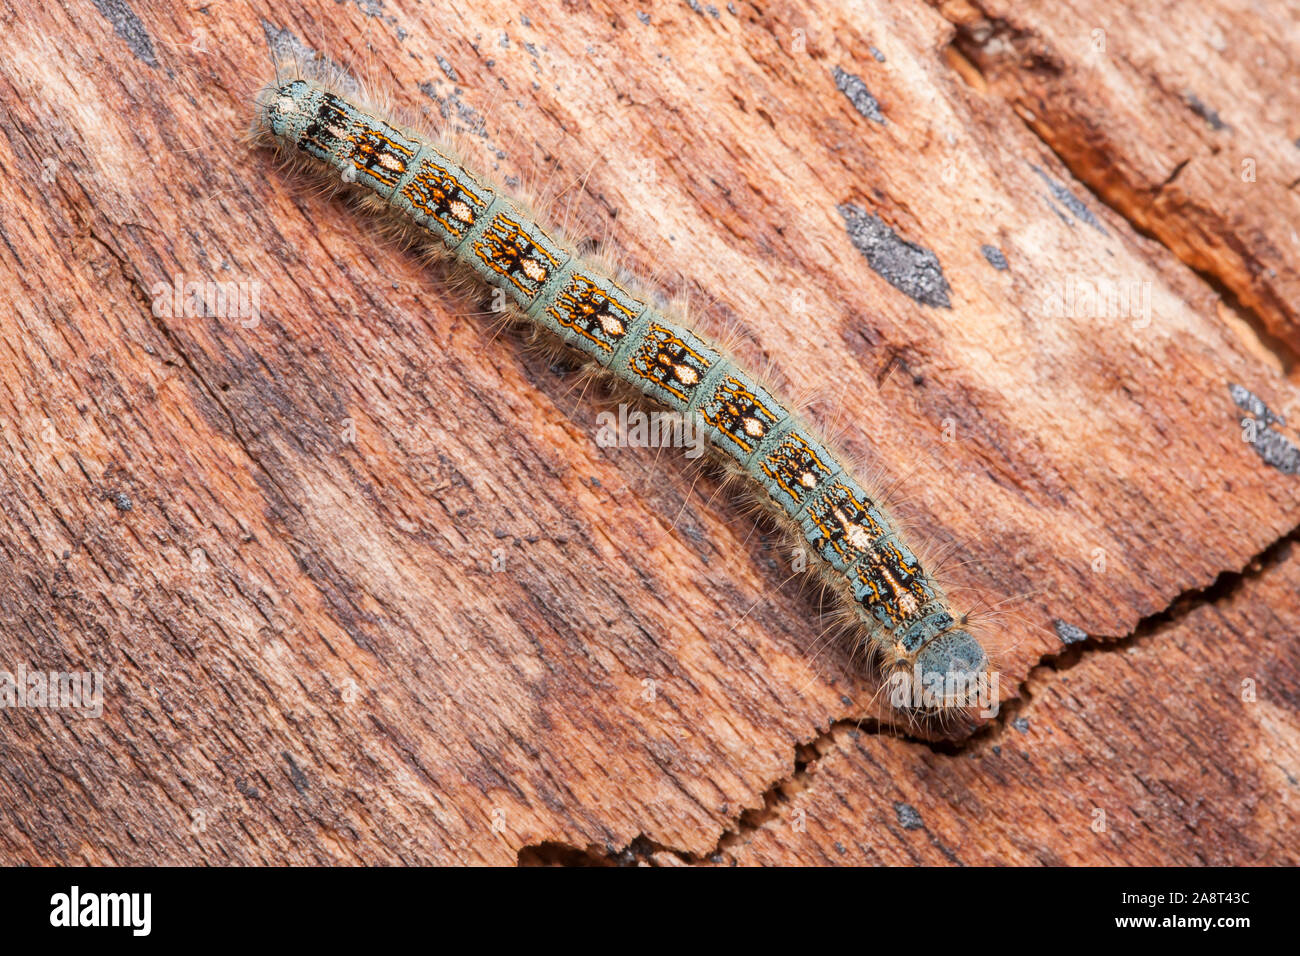 A Forest Tent Caterpillar Moth (Malacosoma disstria) caterpillar (larva) crawls across a decaying log. Stock Photo